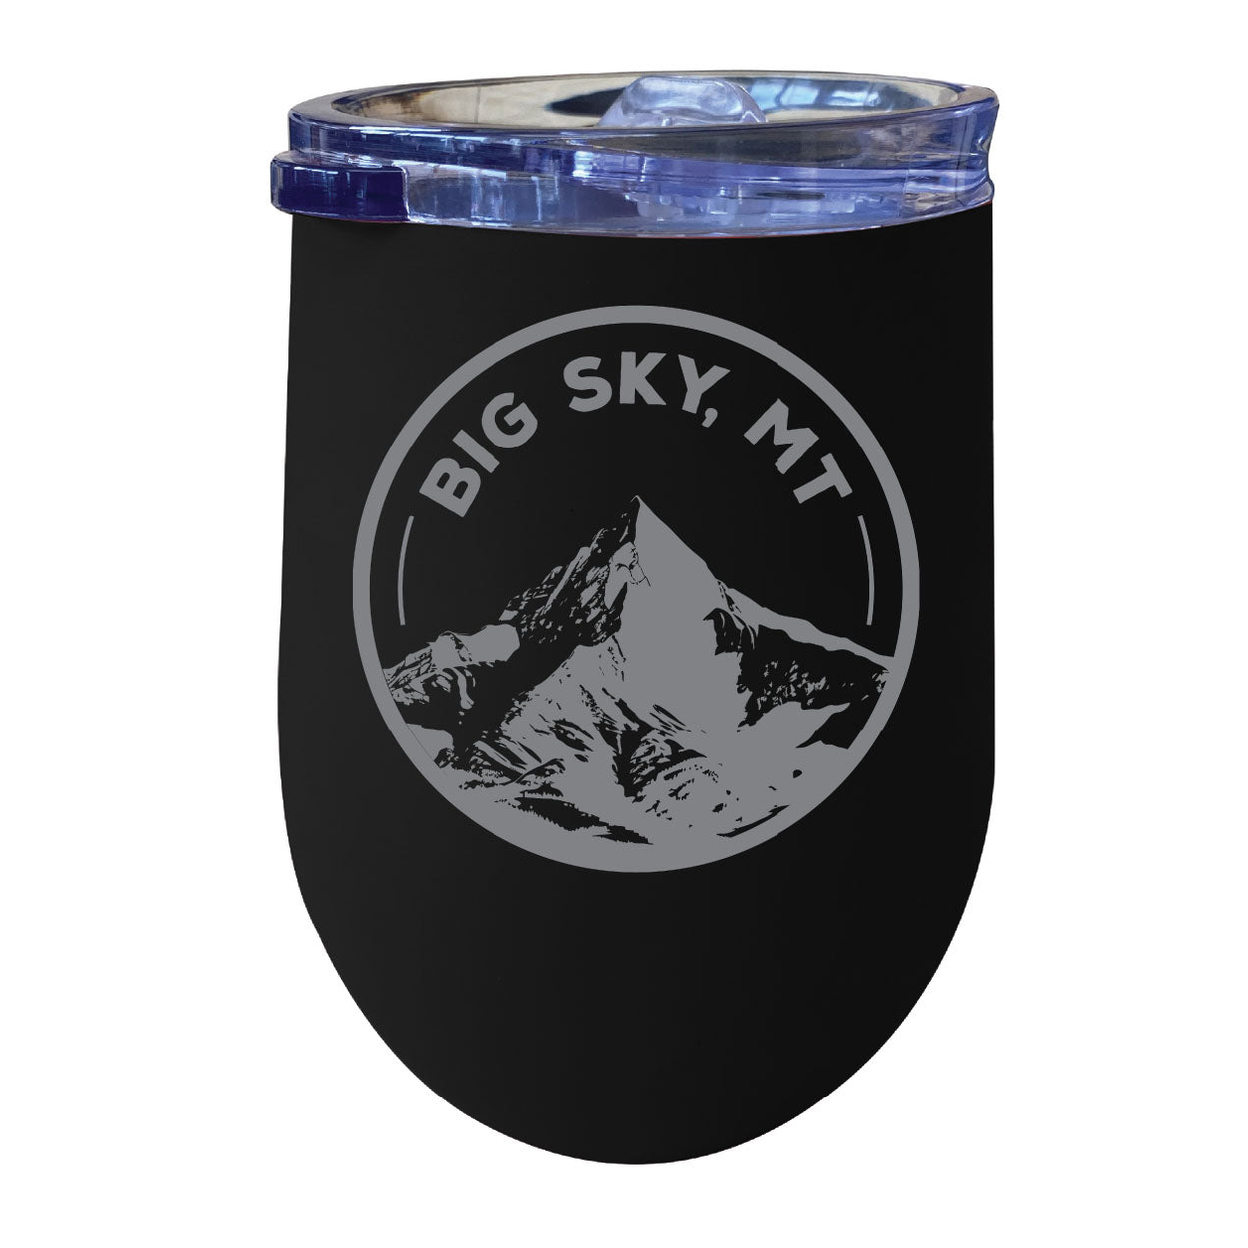 Big Sky Montana Souvenir 12 Oz Engraved Insulated Wine Stainless Steel Tumbler - Black,,Single Unit